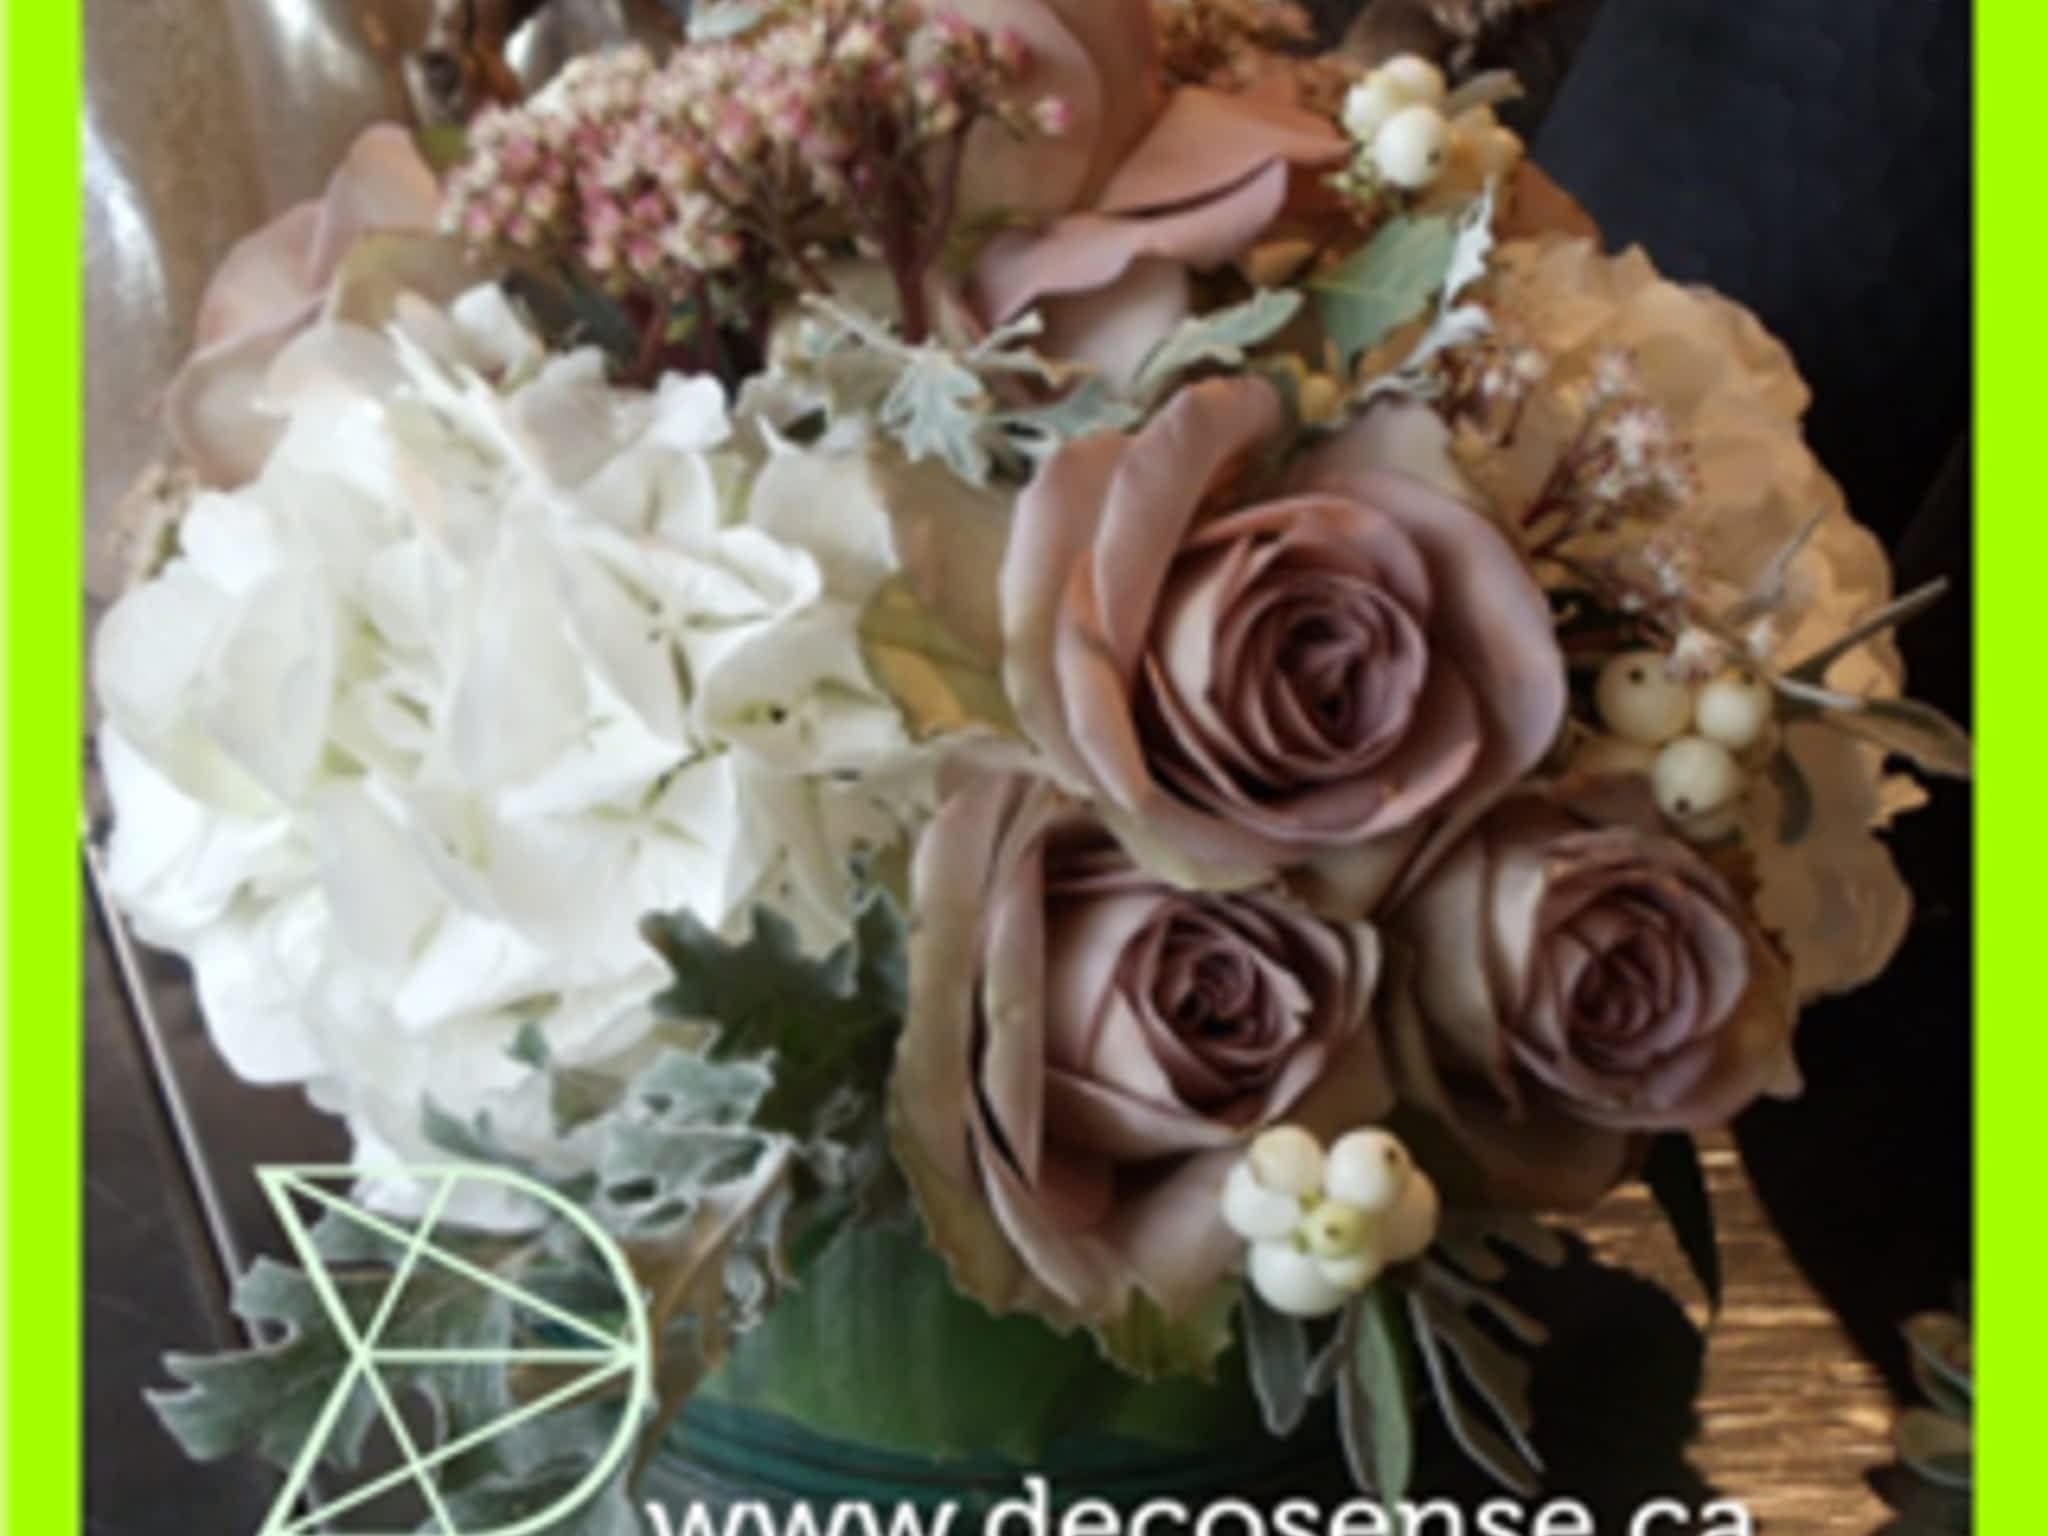 photo Decosense Design Services & Floral Studio